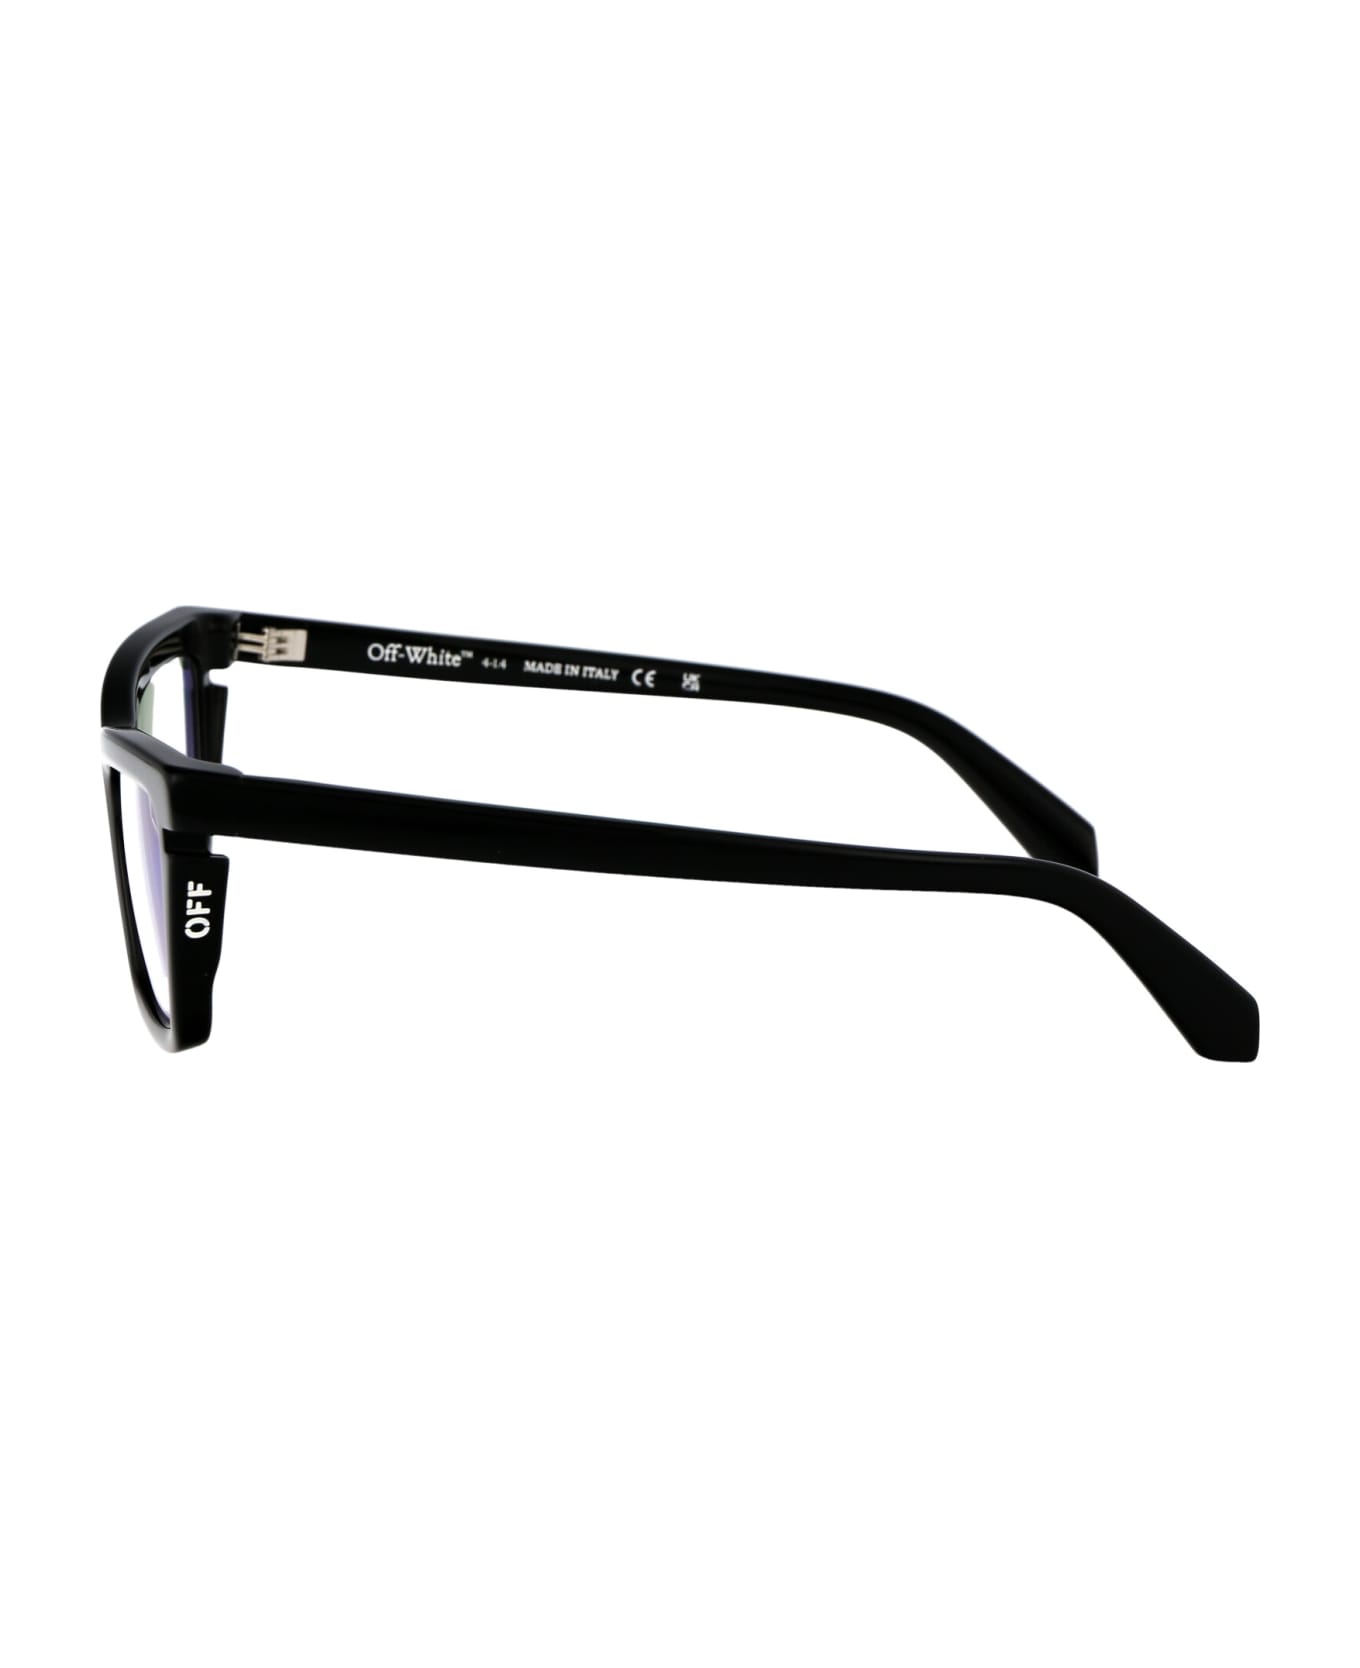 Off-White Optical Style 50 Glasses - 1000 BLACK